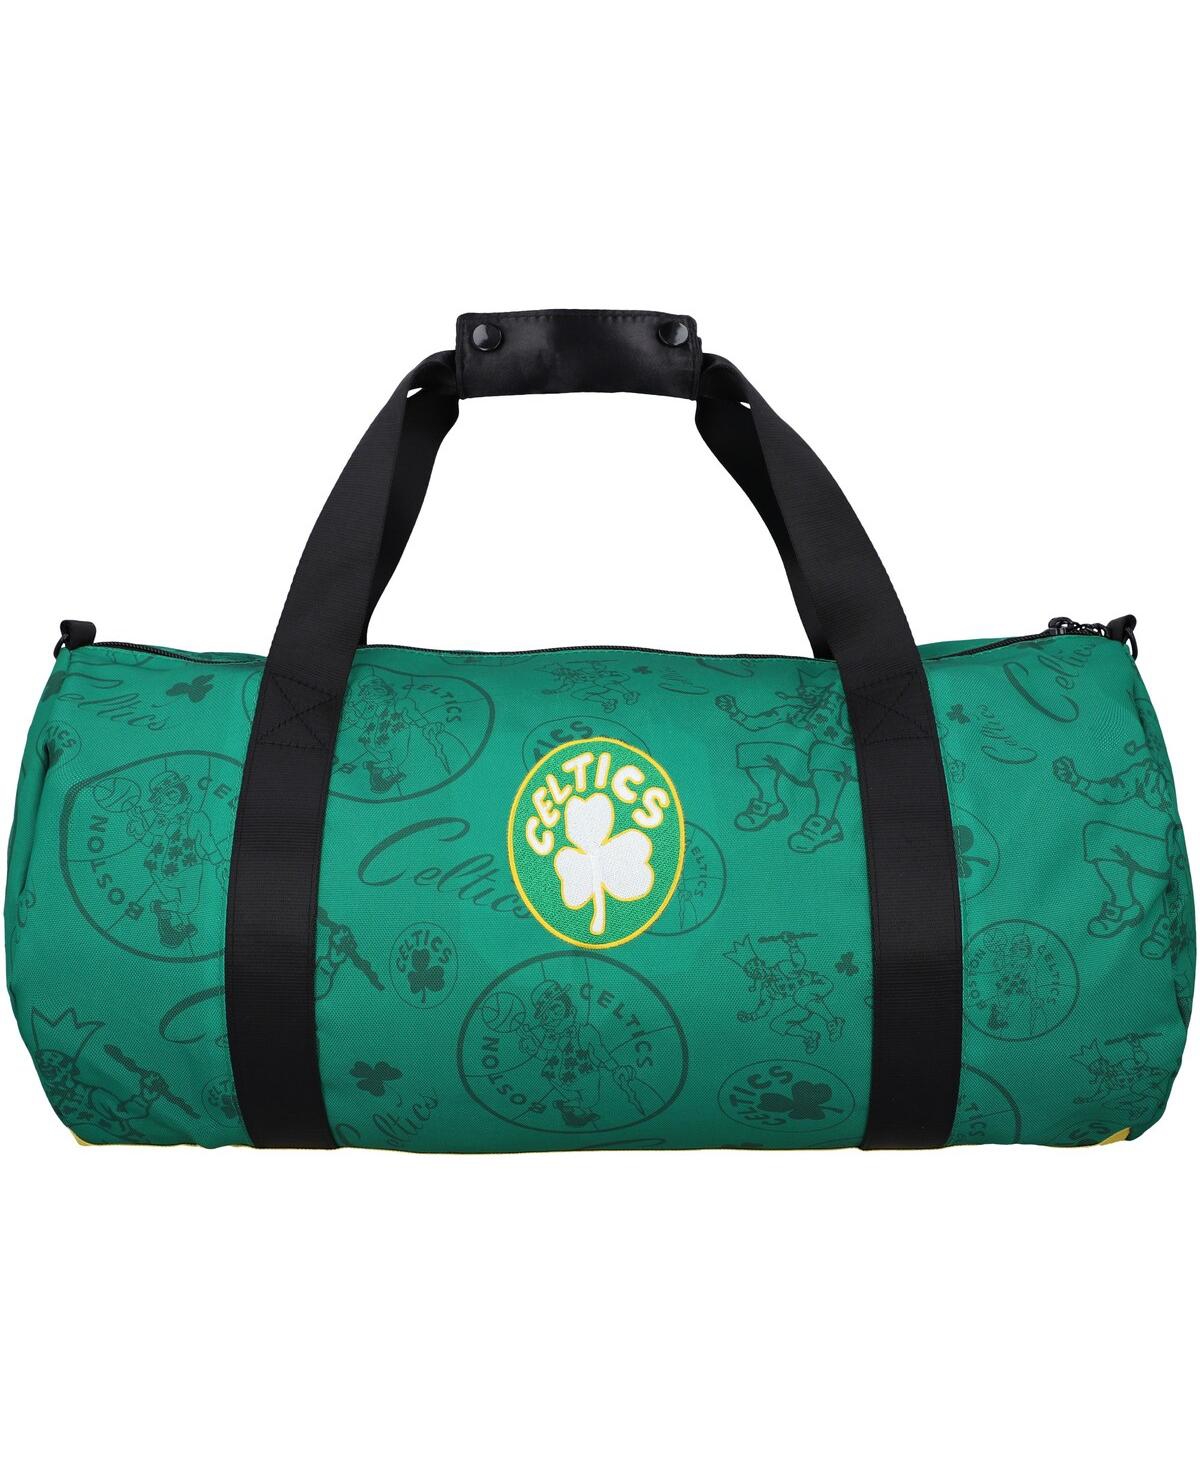 Men's and Women's Mitchell & Ness Boston Celtics Team Logo Duffle Bag - Green